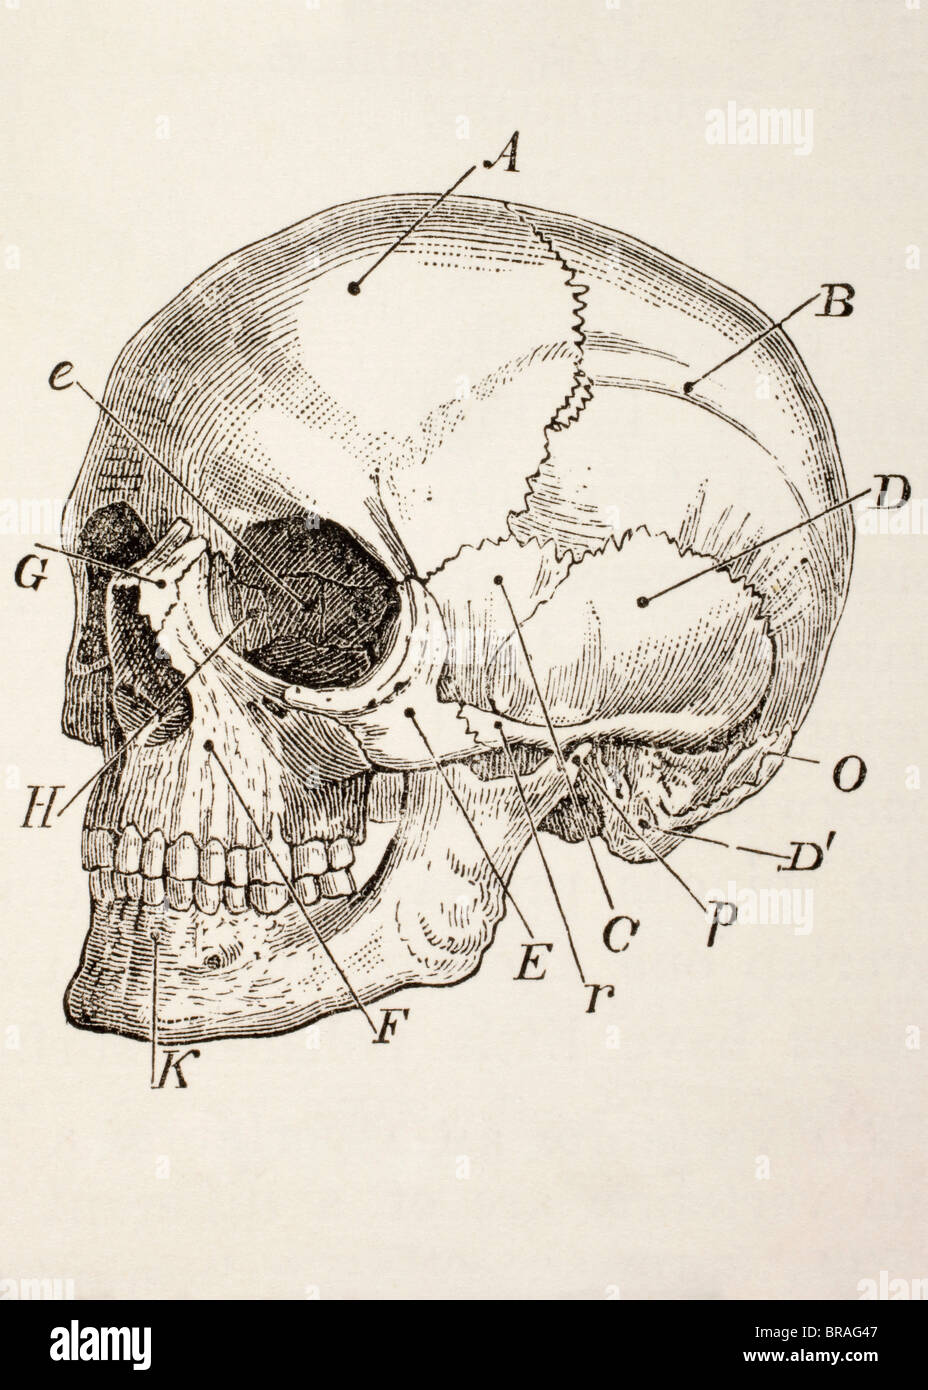 The human skull. Stock Photo